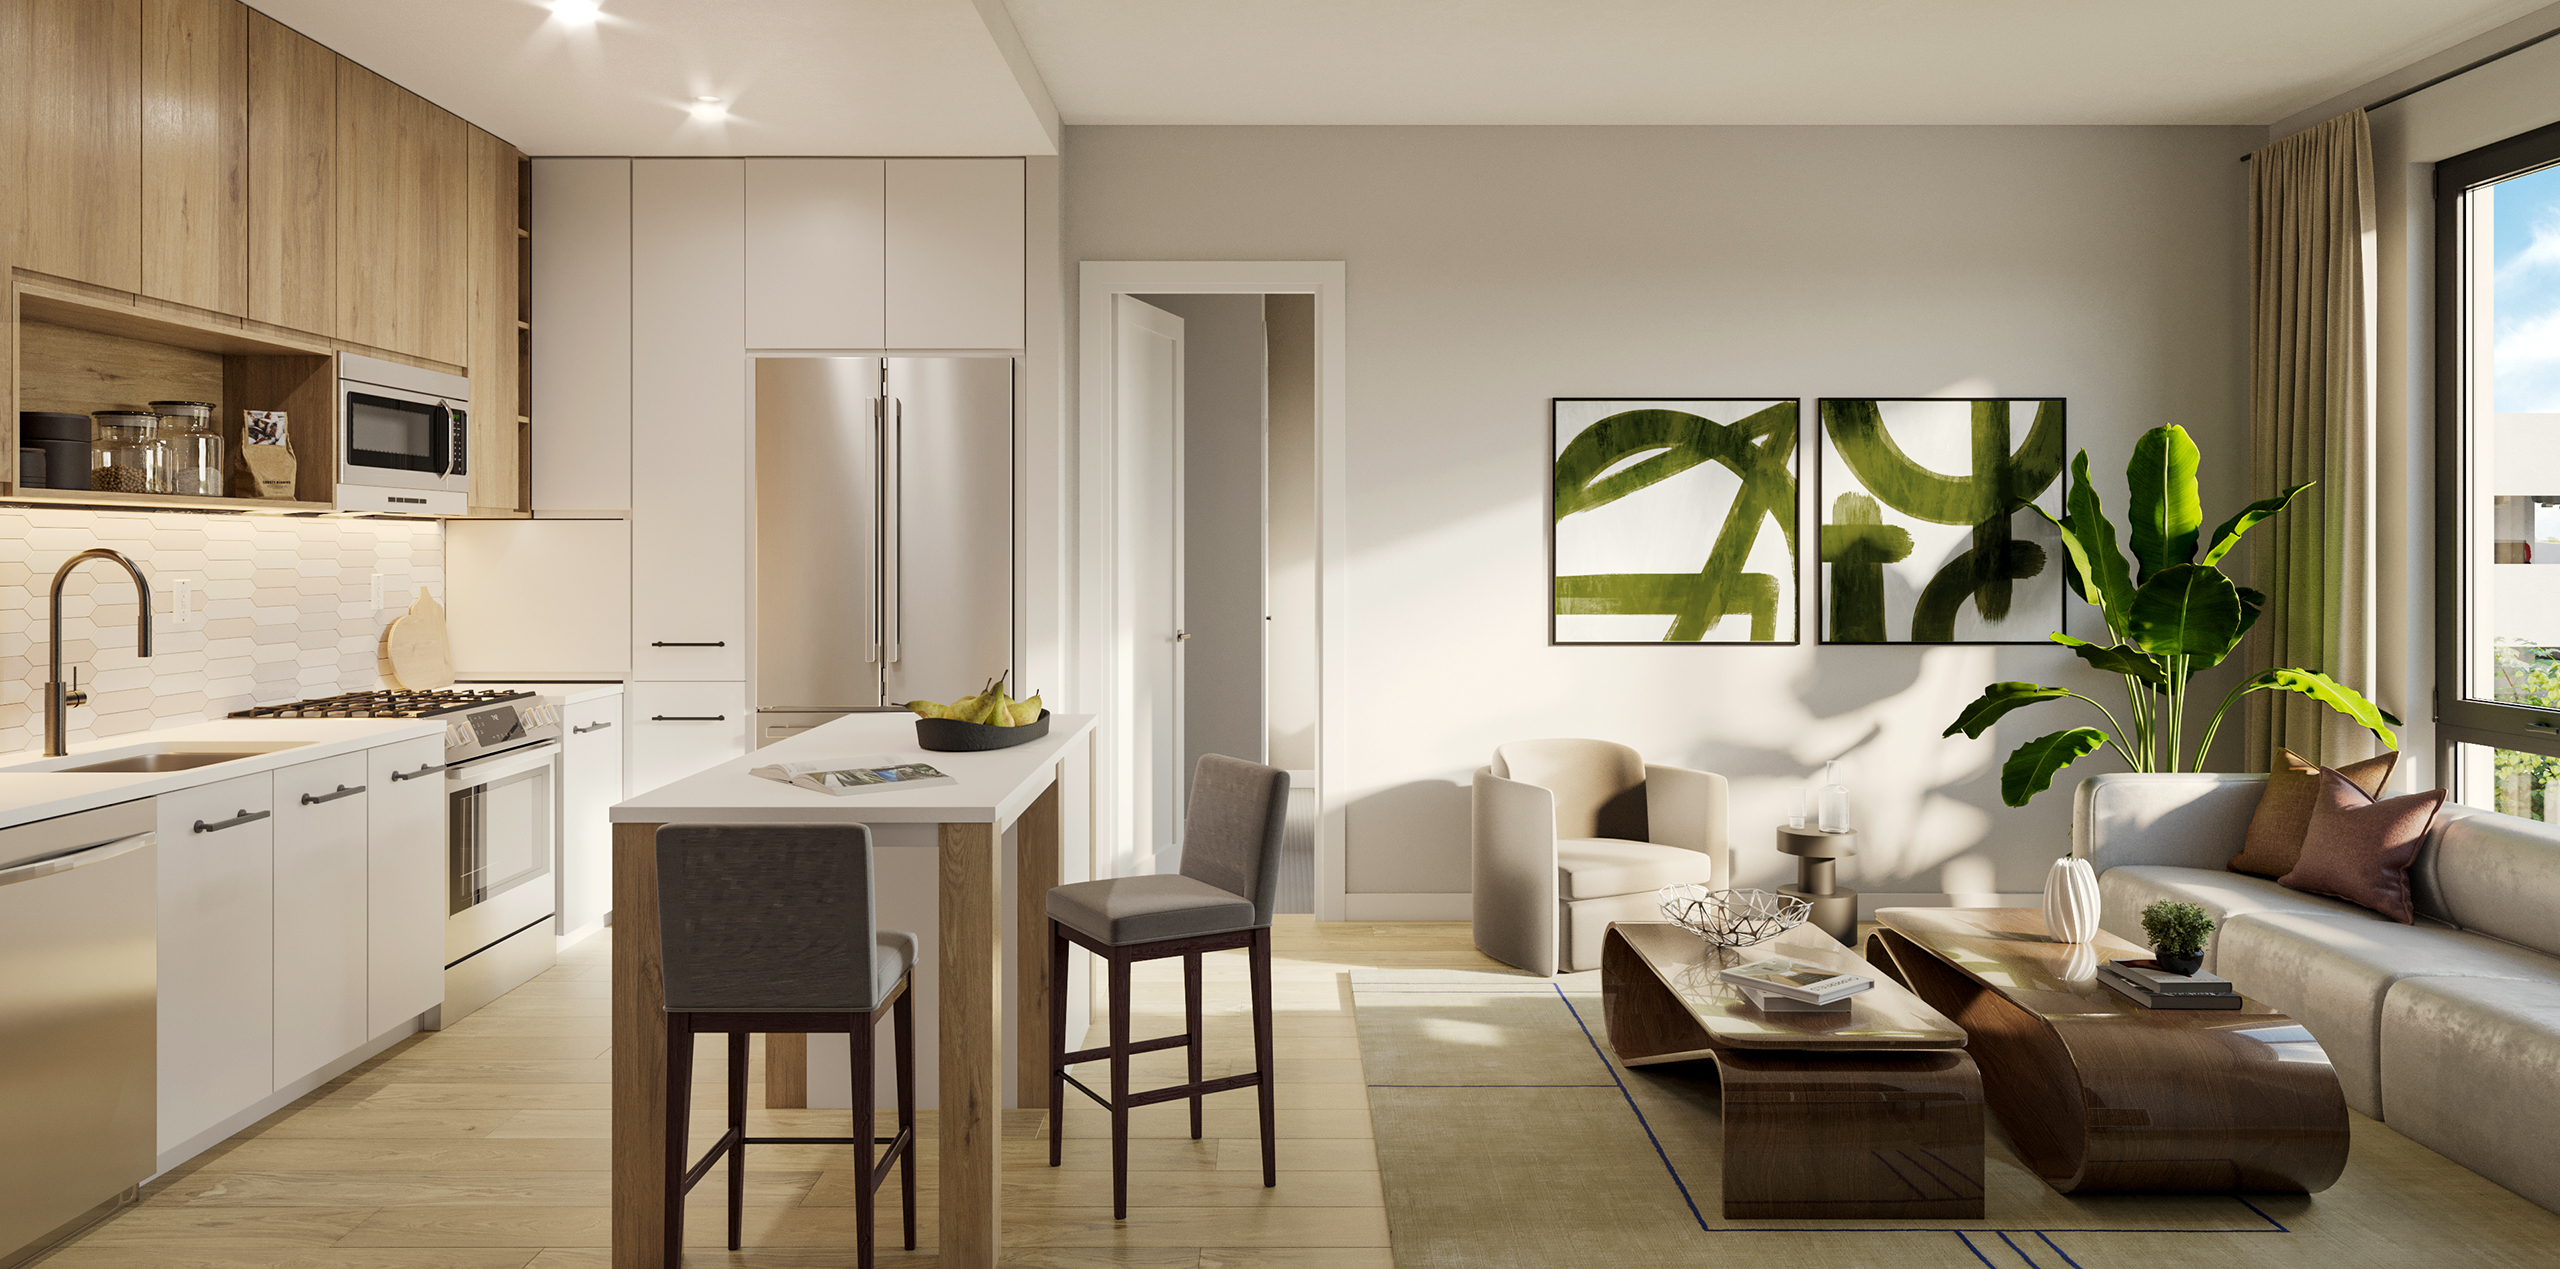 The Oak Condominium kitchen and living room area